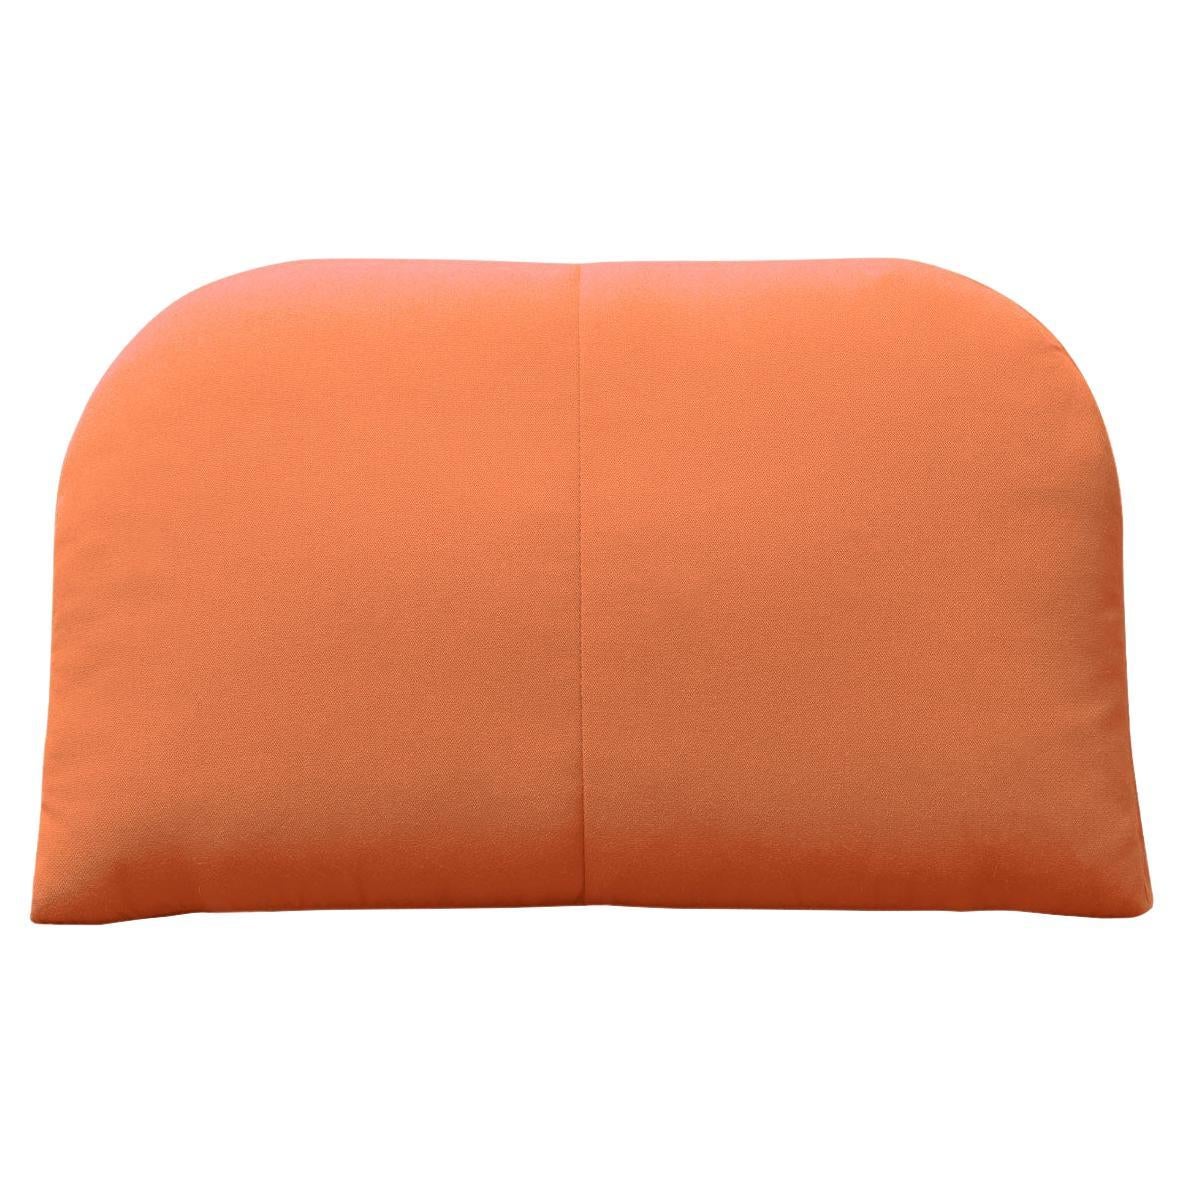 Bend Goods - Arc Throw Pillow in Melon Sunbrella For Sale